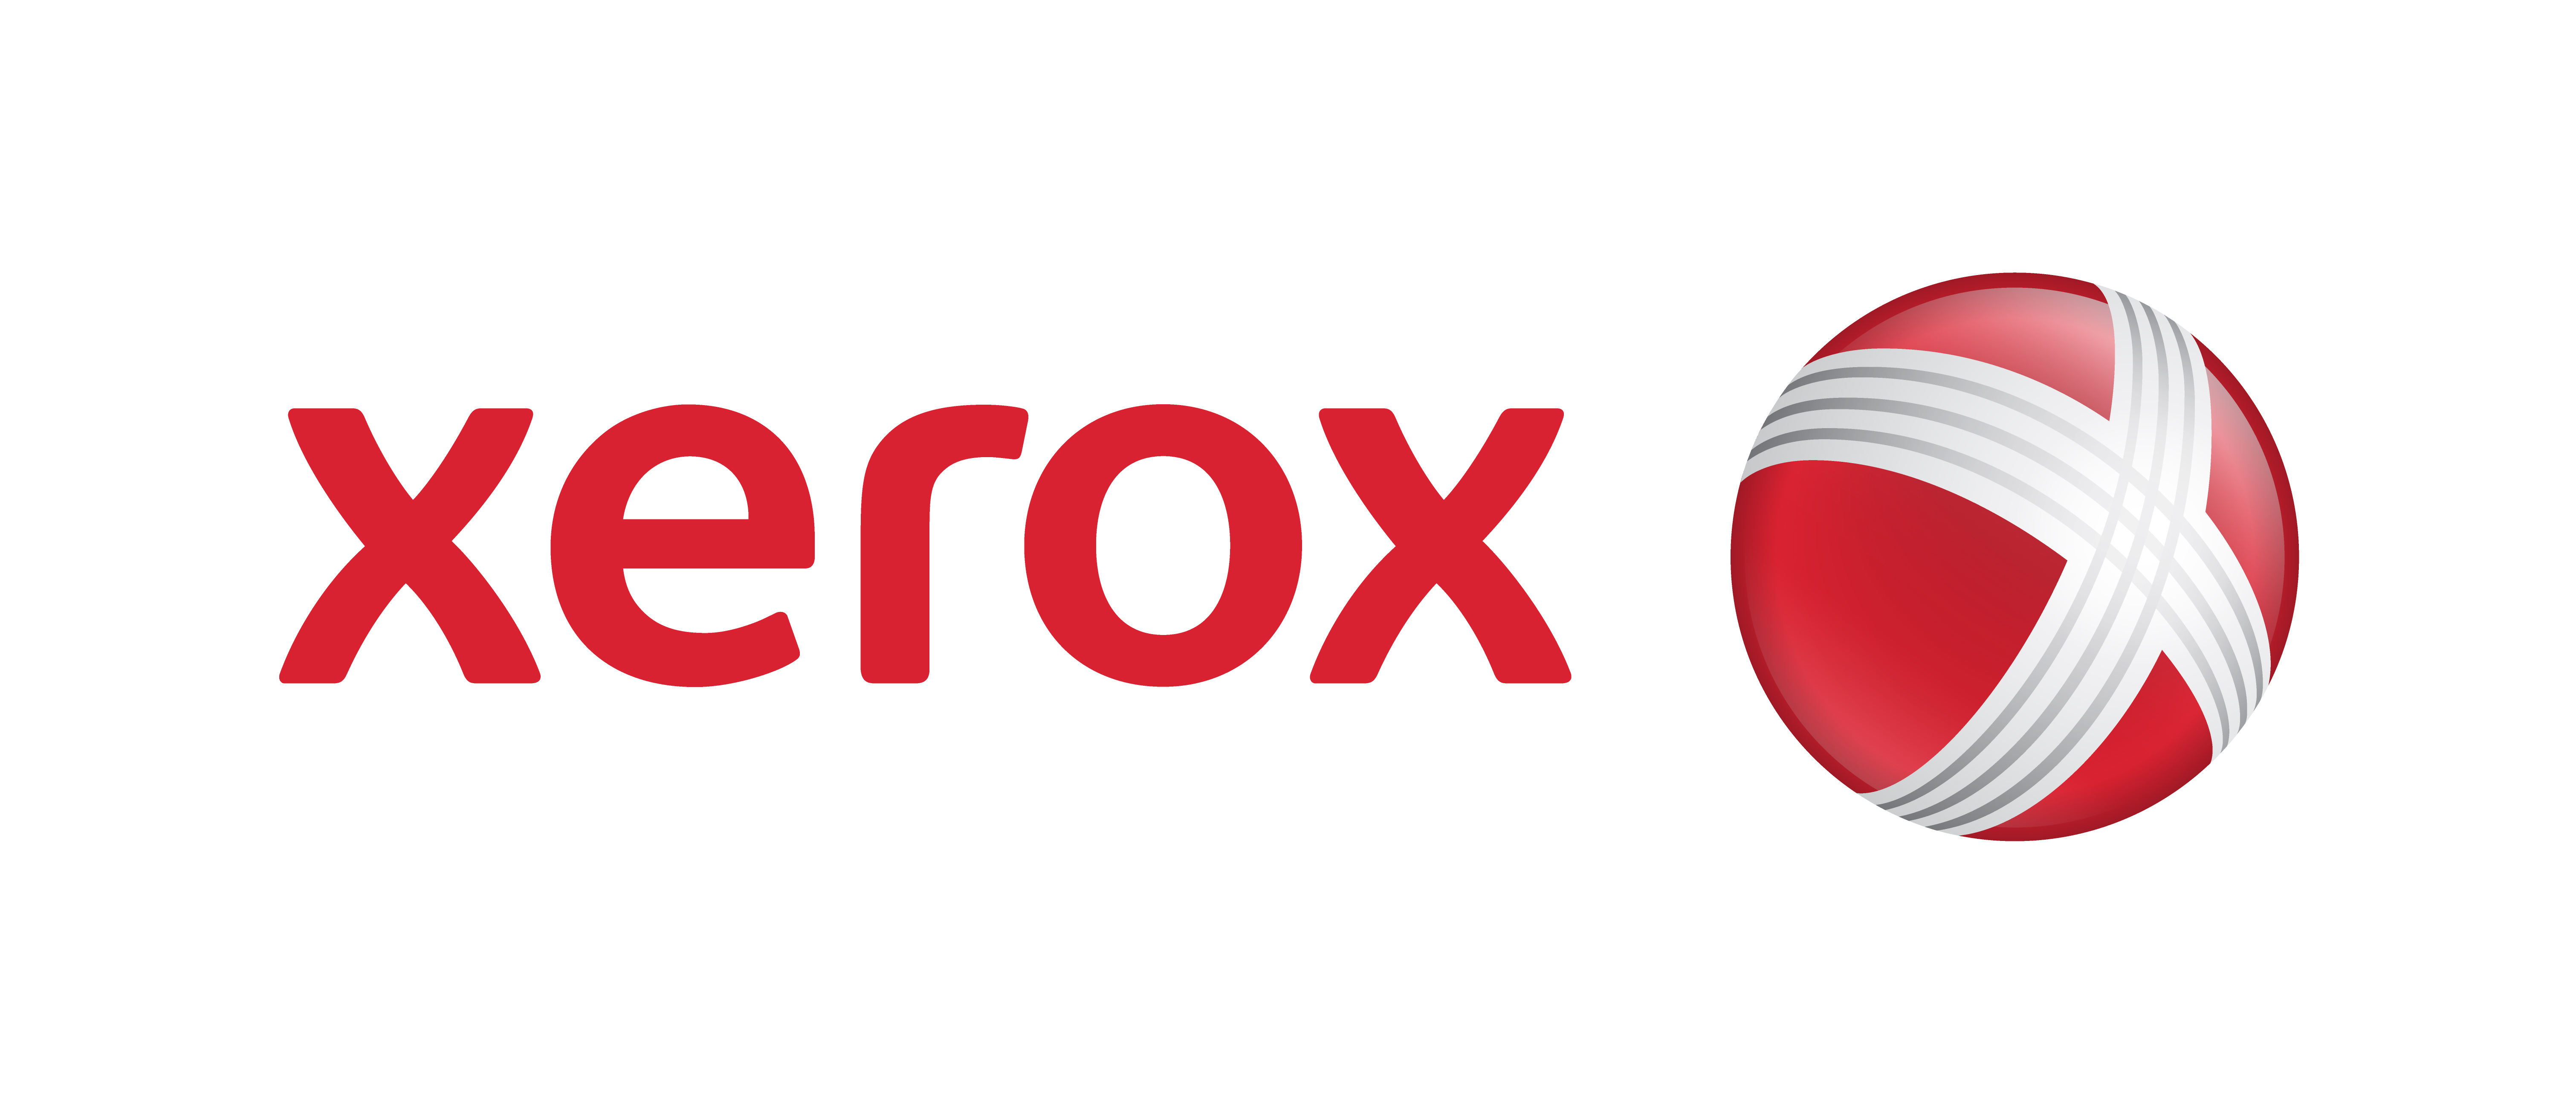 Xerox Logo Wallpaper